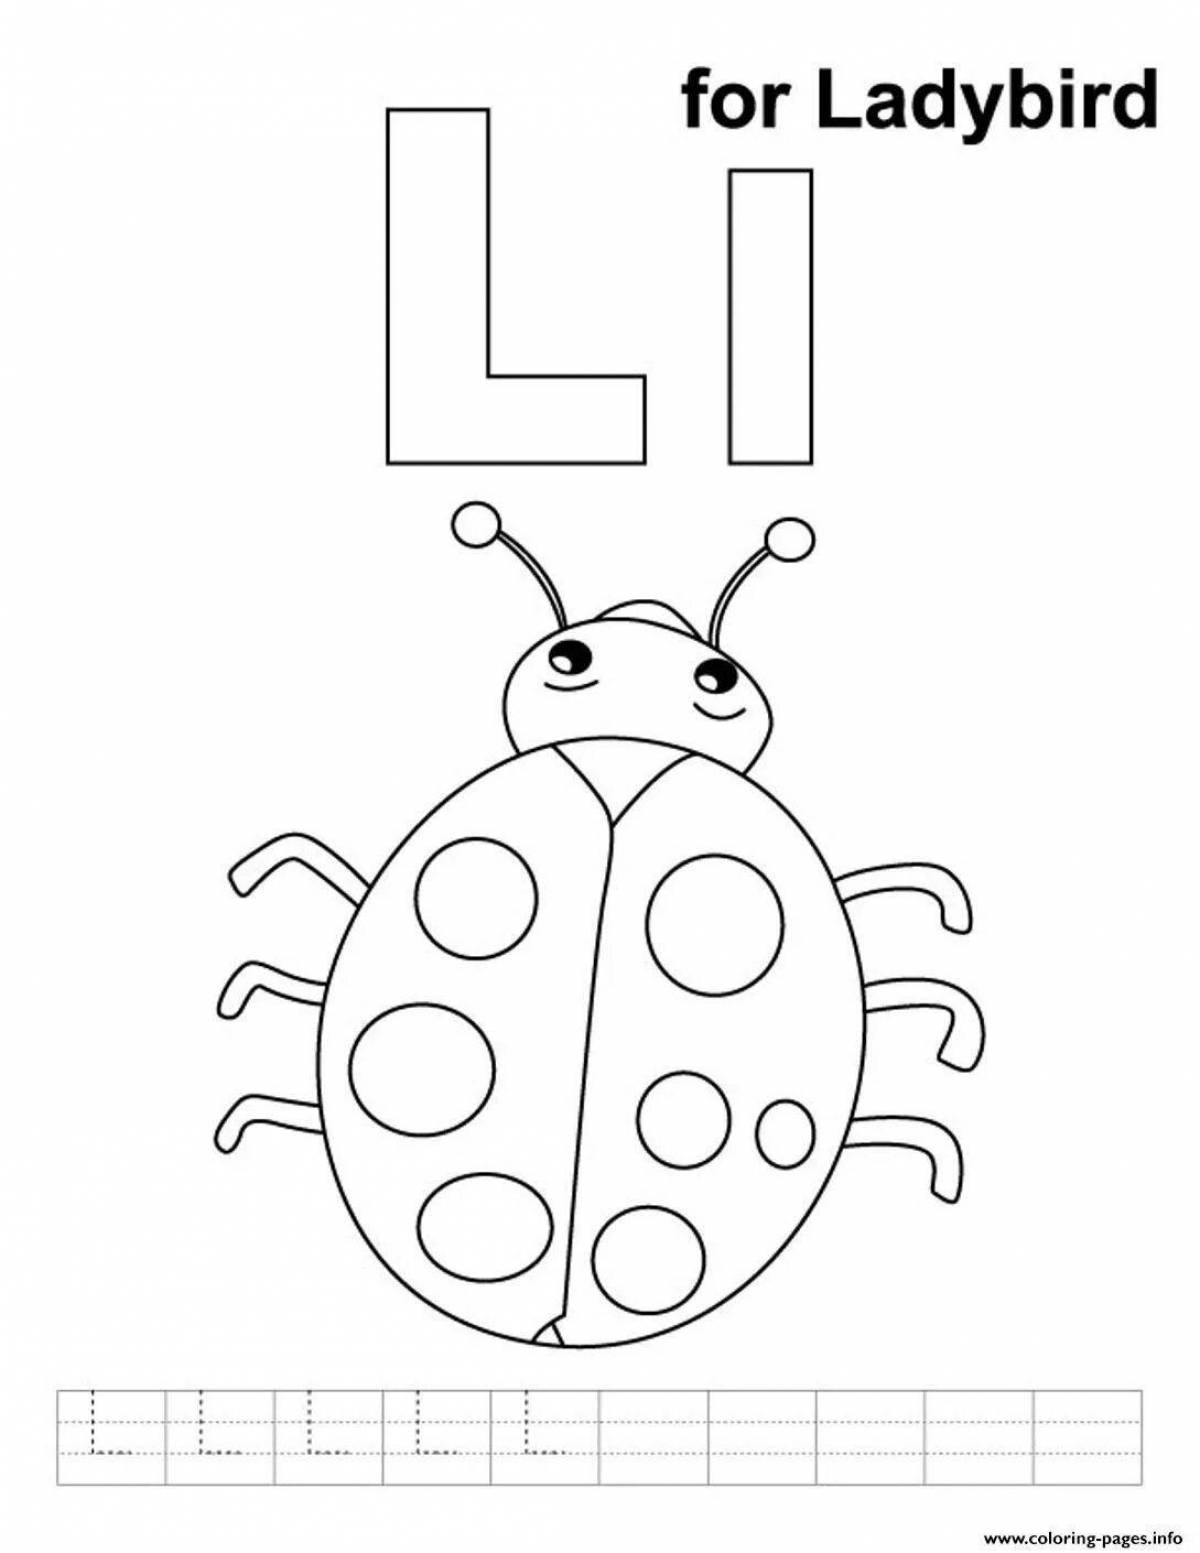 Ladybug coloring page